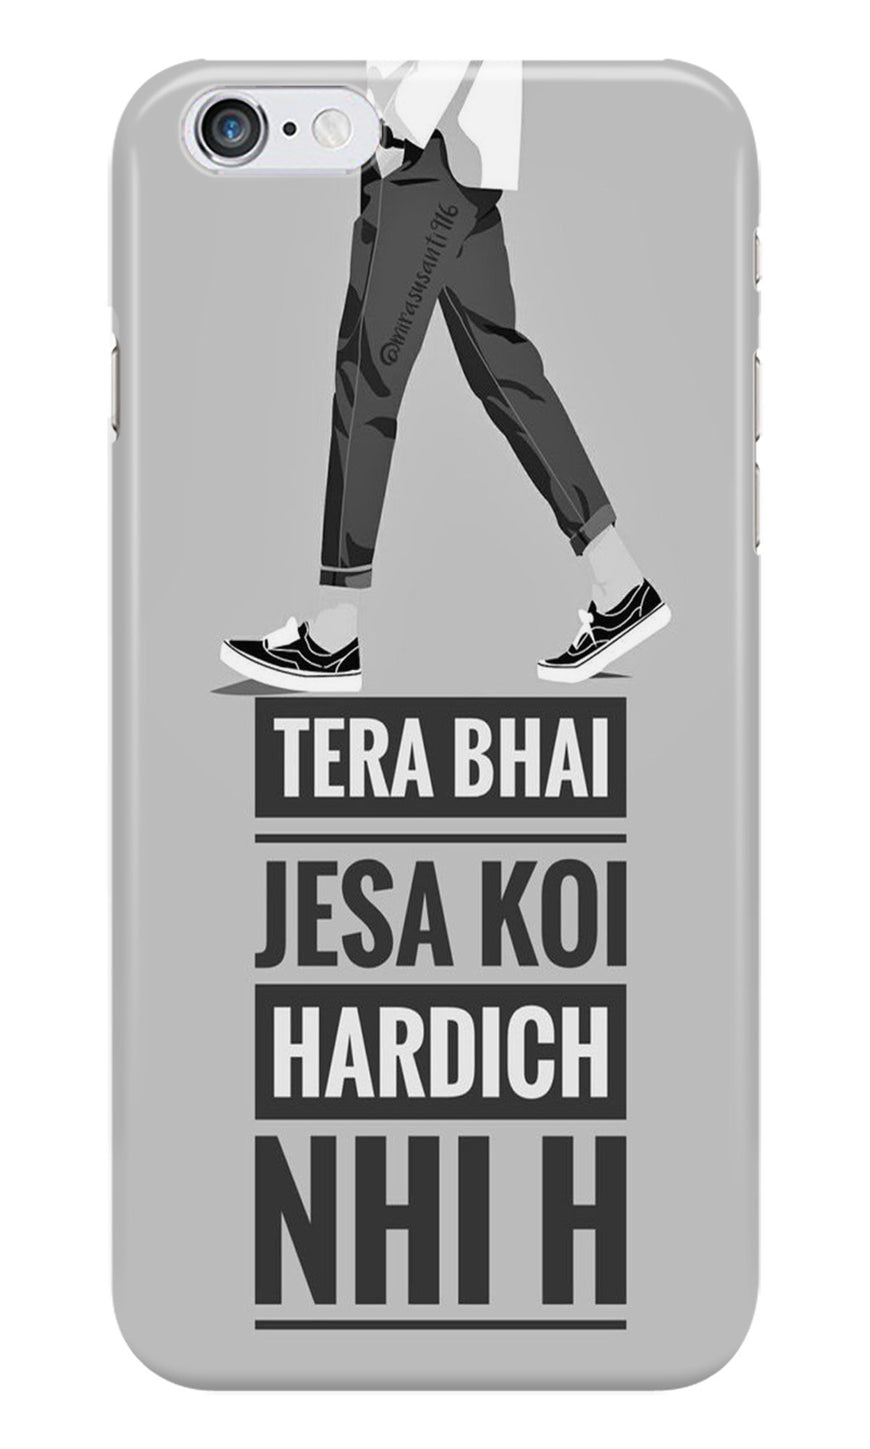 Hardich Nahi Case for Iphone 6/6S (Design No. 214)